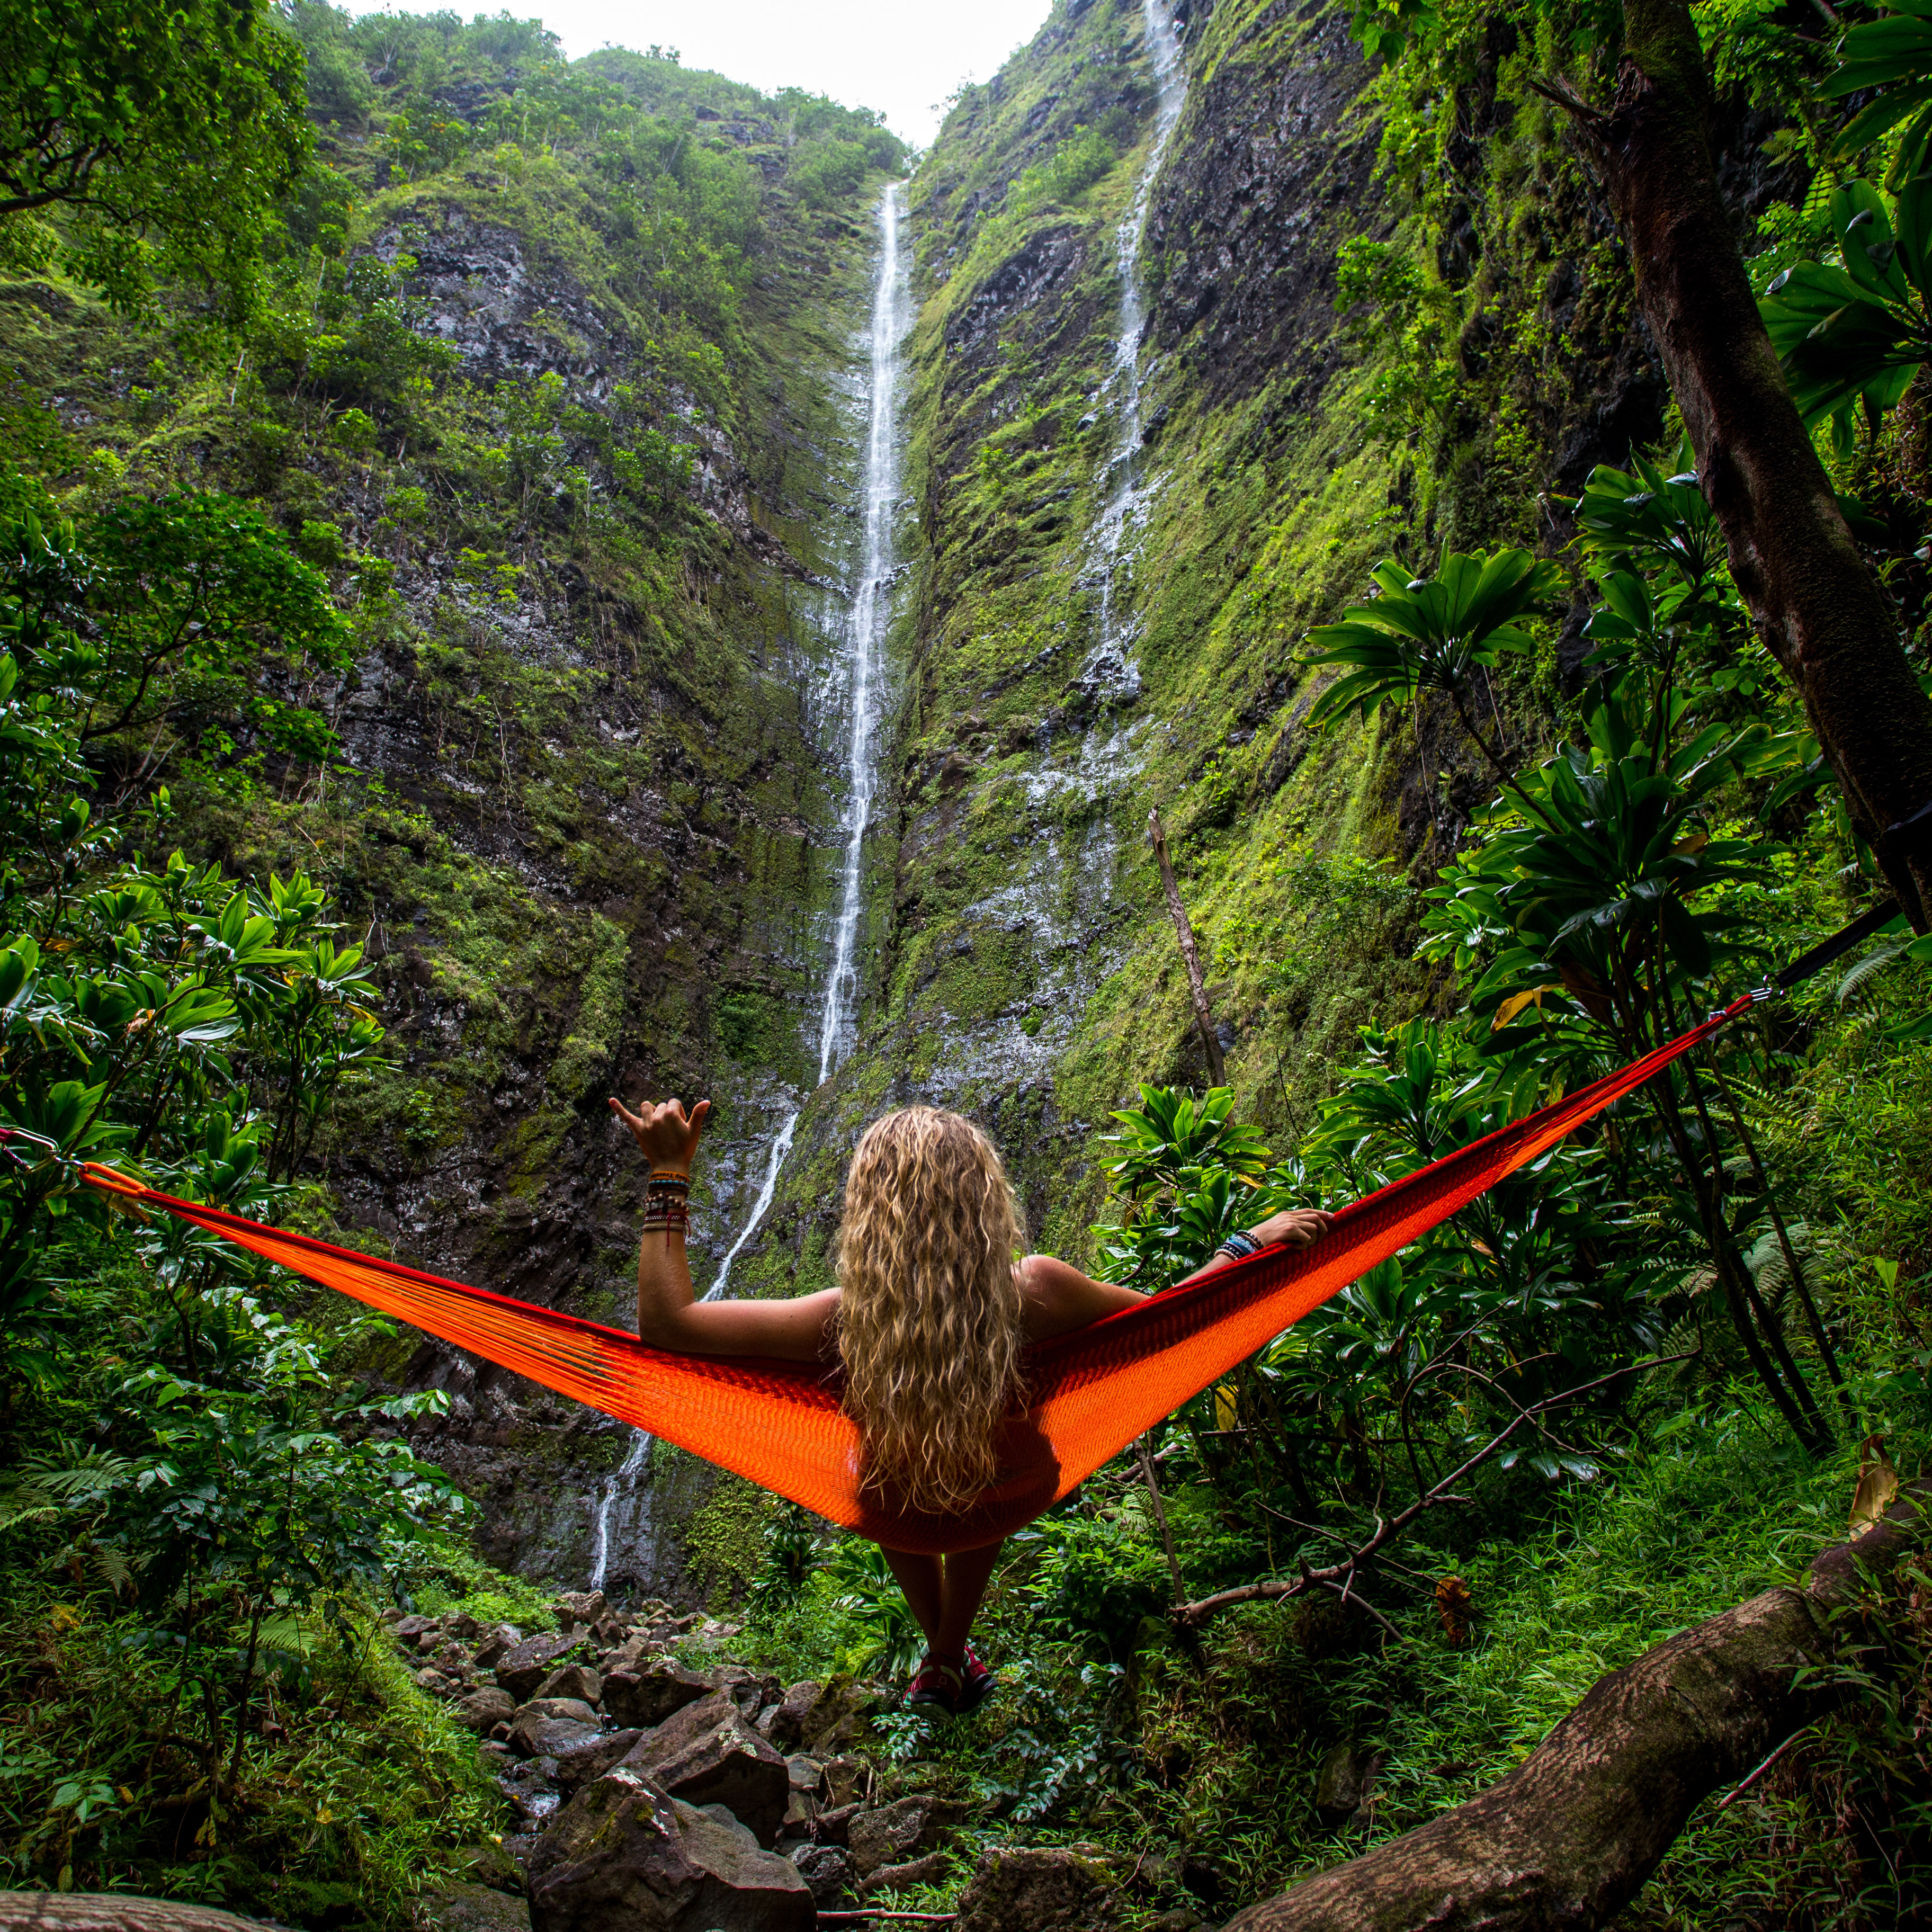 Watching the Waterfall in a Hammock in Hawaii image - Free stock ...